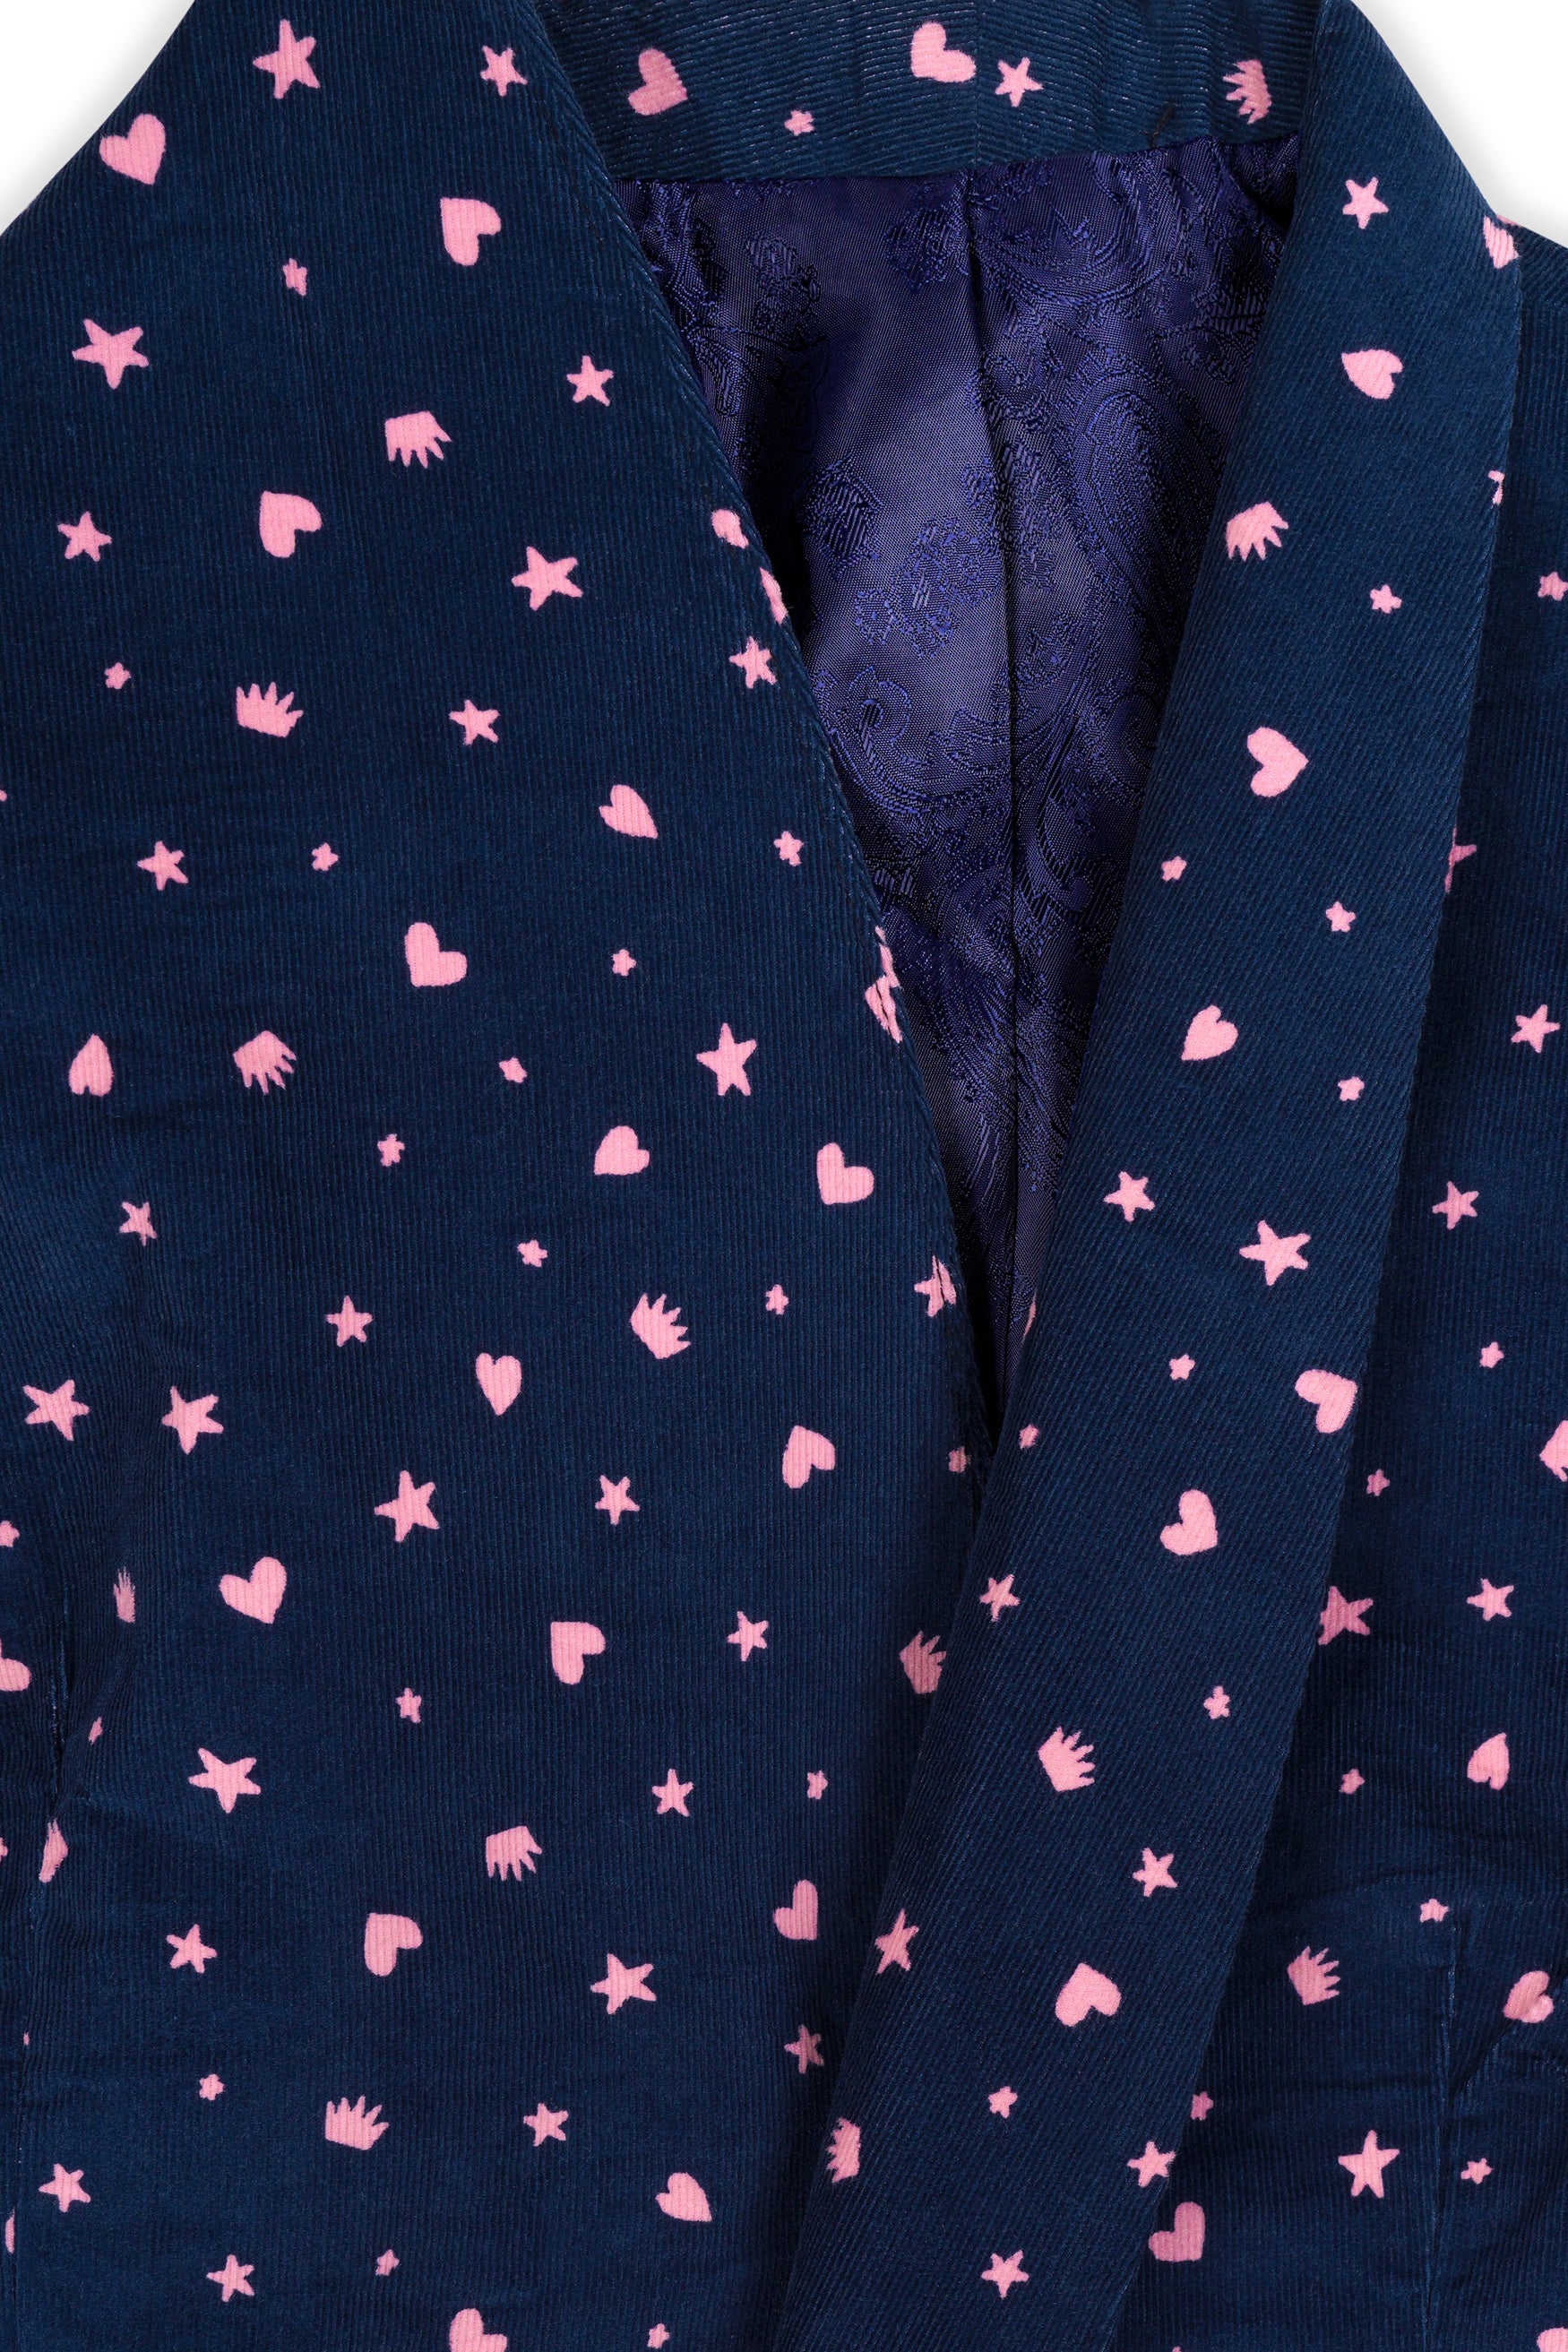 Downriver Blue and Cavern Pink Shapes Printed Premium Cotton Women’s Tuxedo Blazer